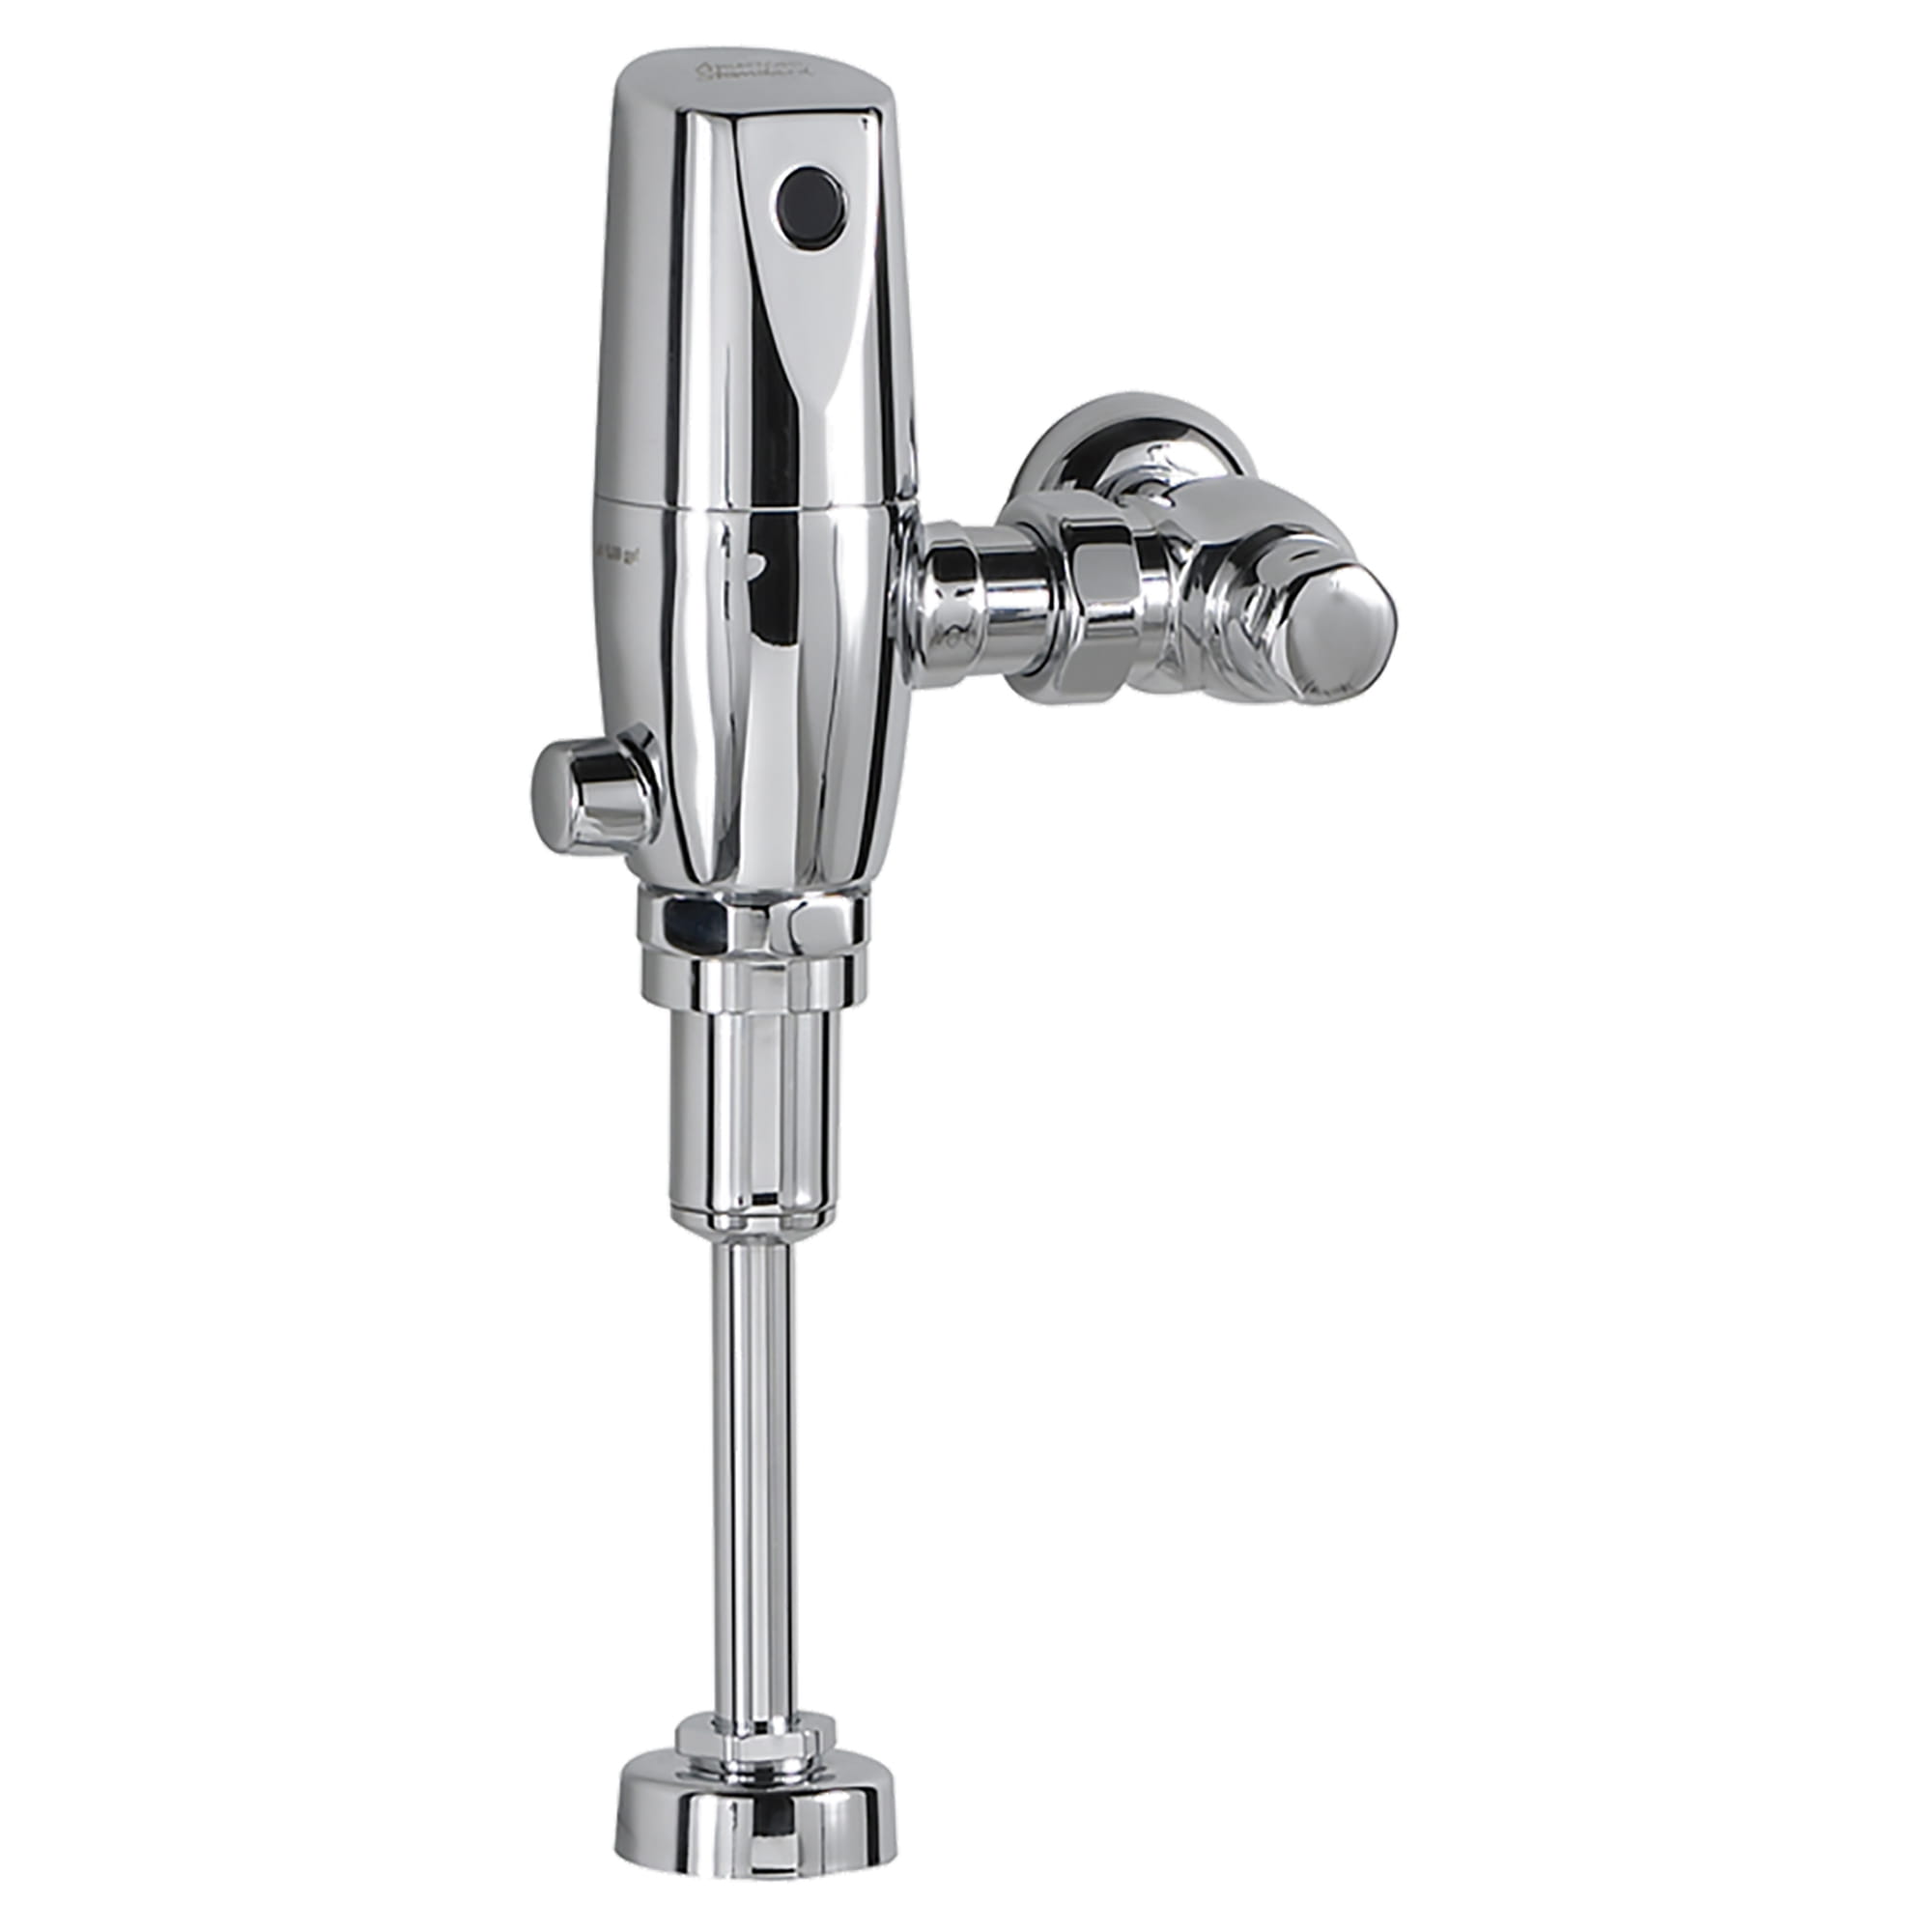 Bath Toilet High quality brass urinal flush valve inlet spud assy new 